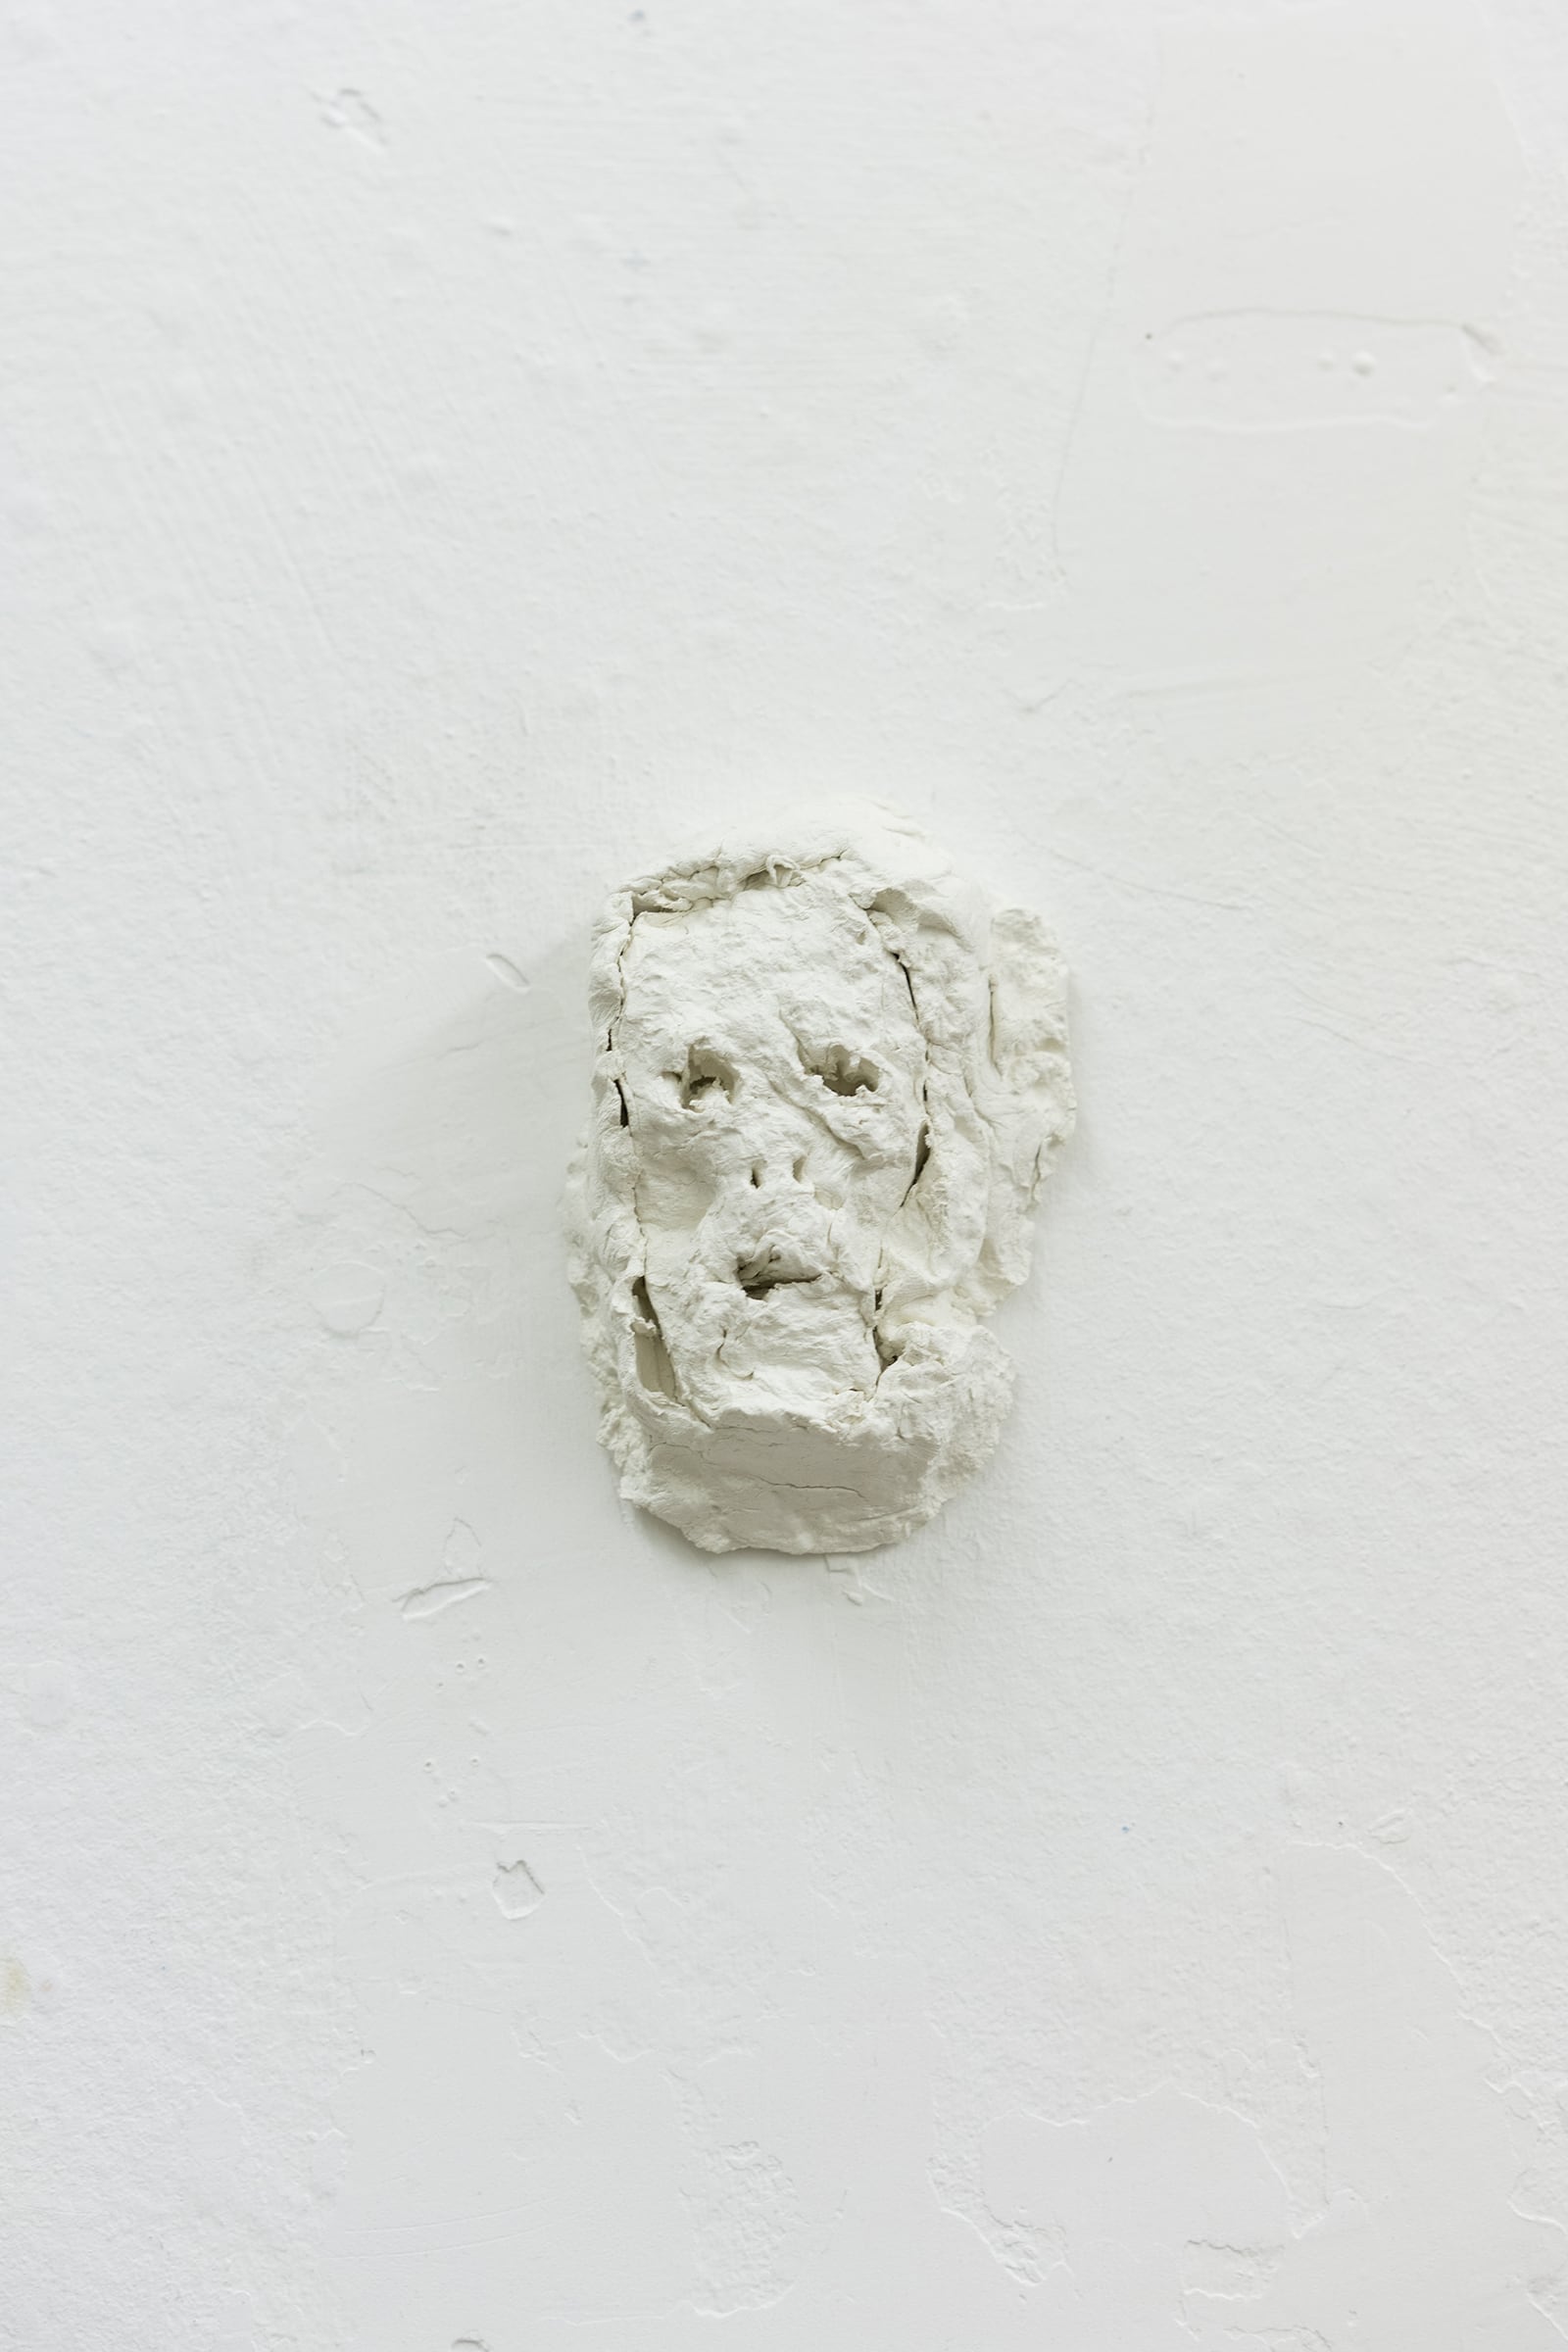 Olga Paramonova, In the name of culture II, 2022, polymer clay, 3 x 4 x 6 cm